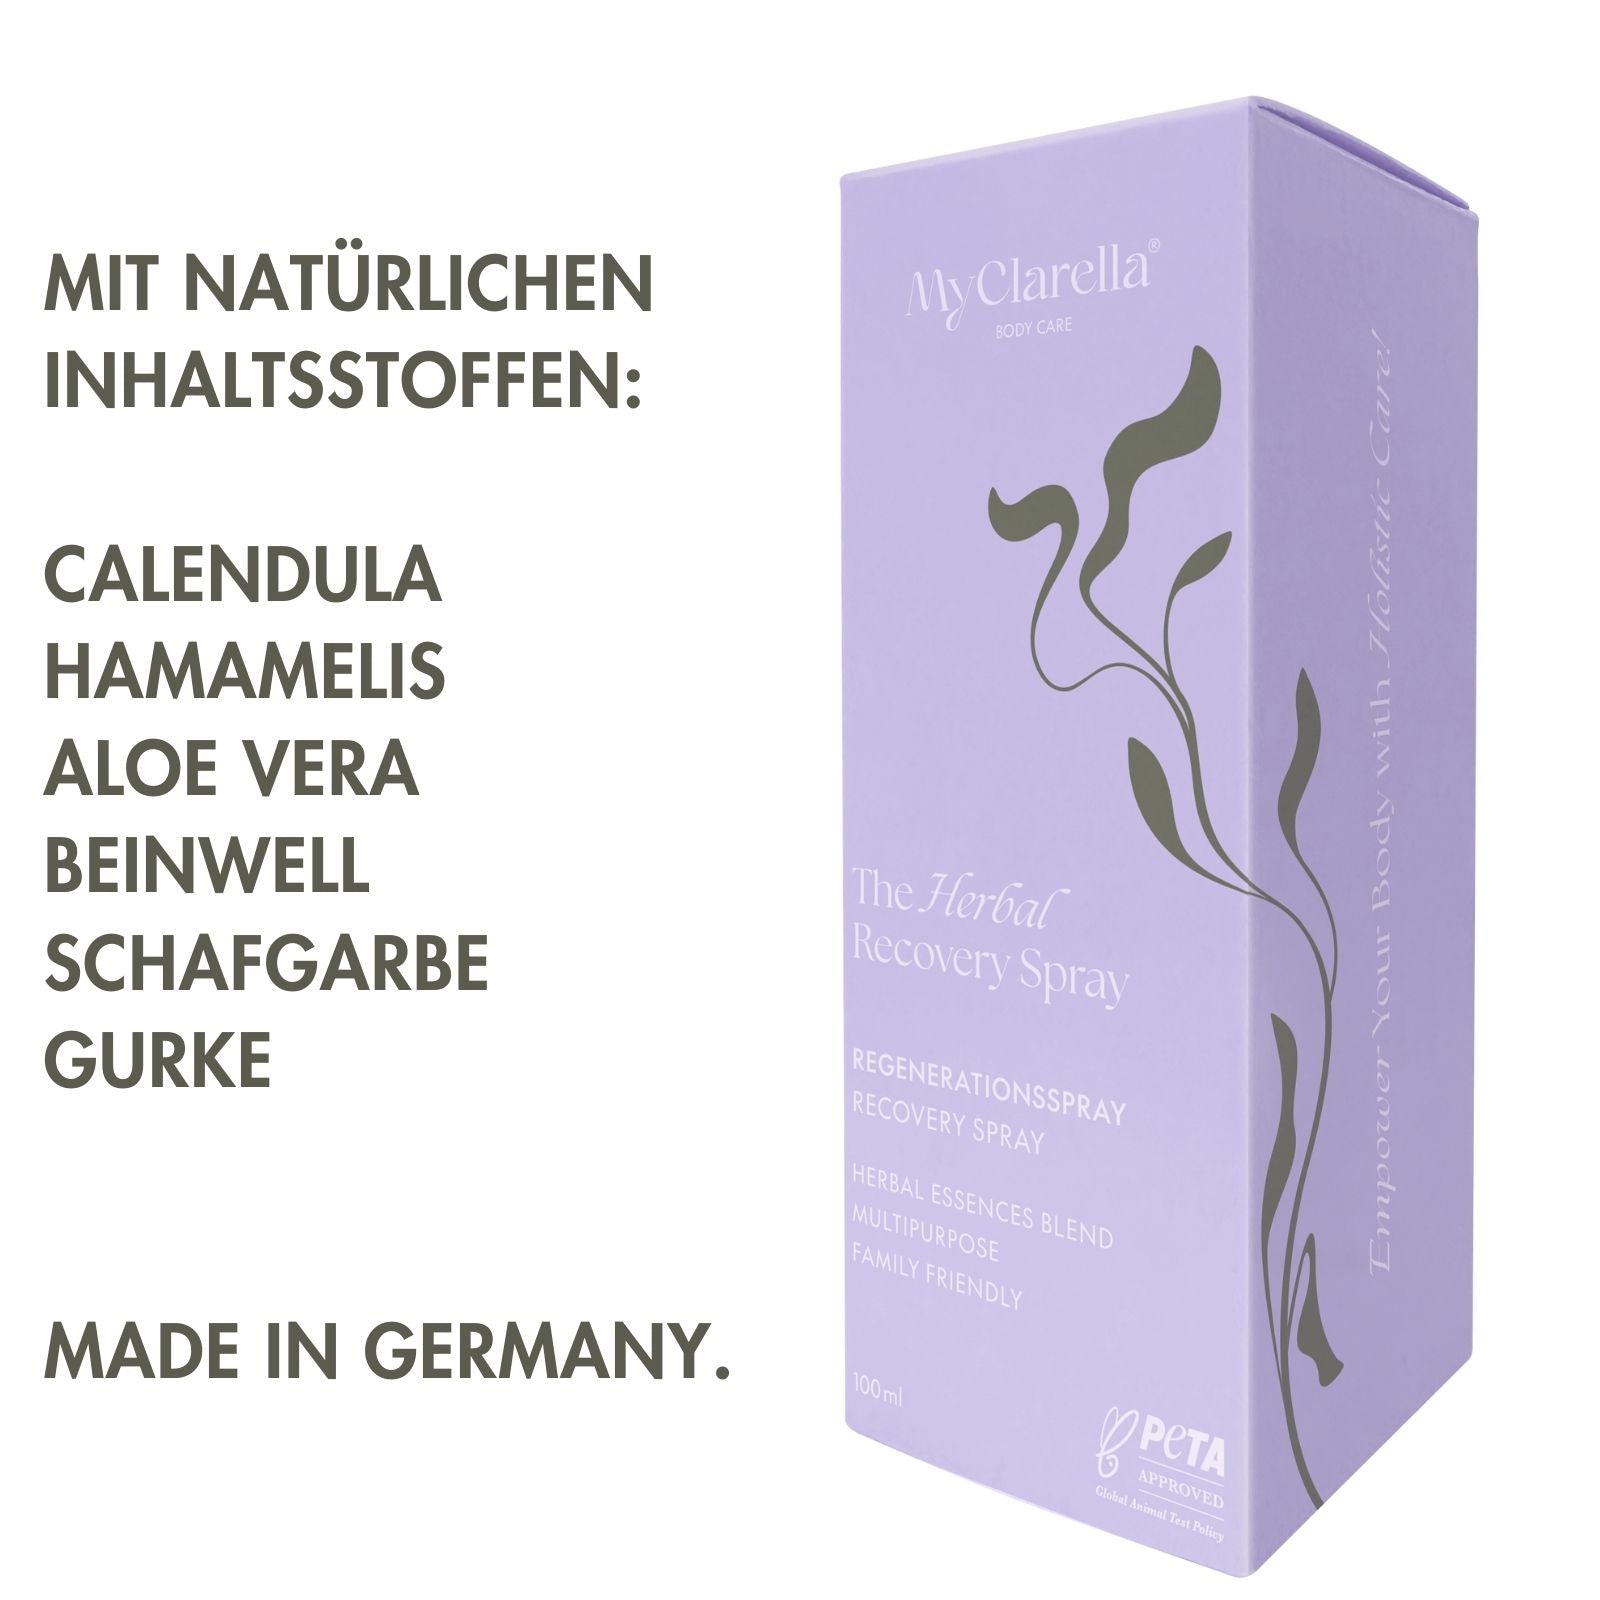 The Herbal Recovery Spray - Regenerationsspray / Intimpflege mit Calendula & Hamamelis - MyClarella